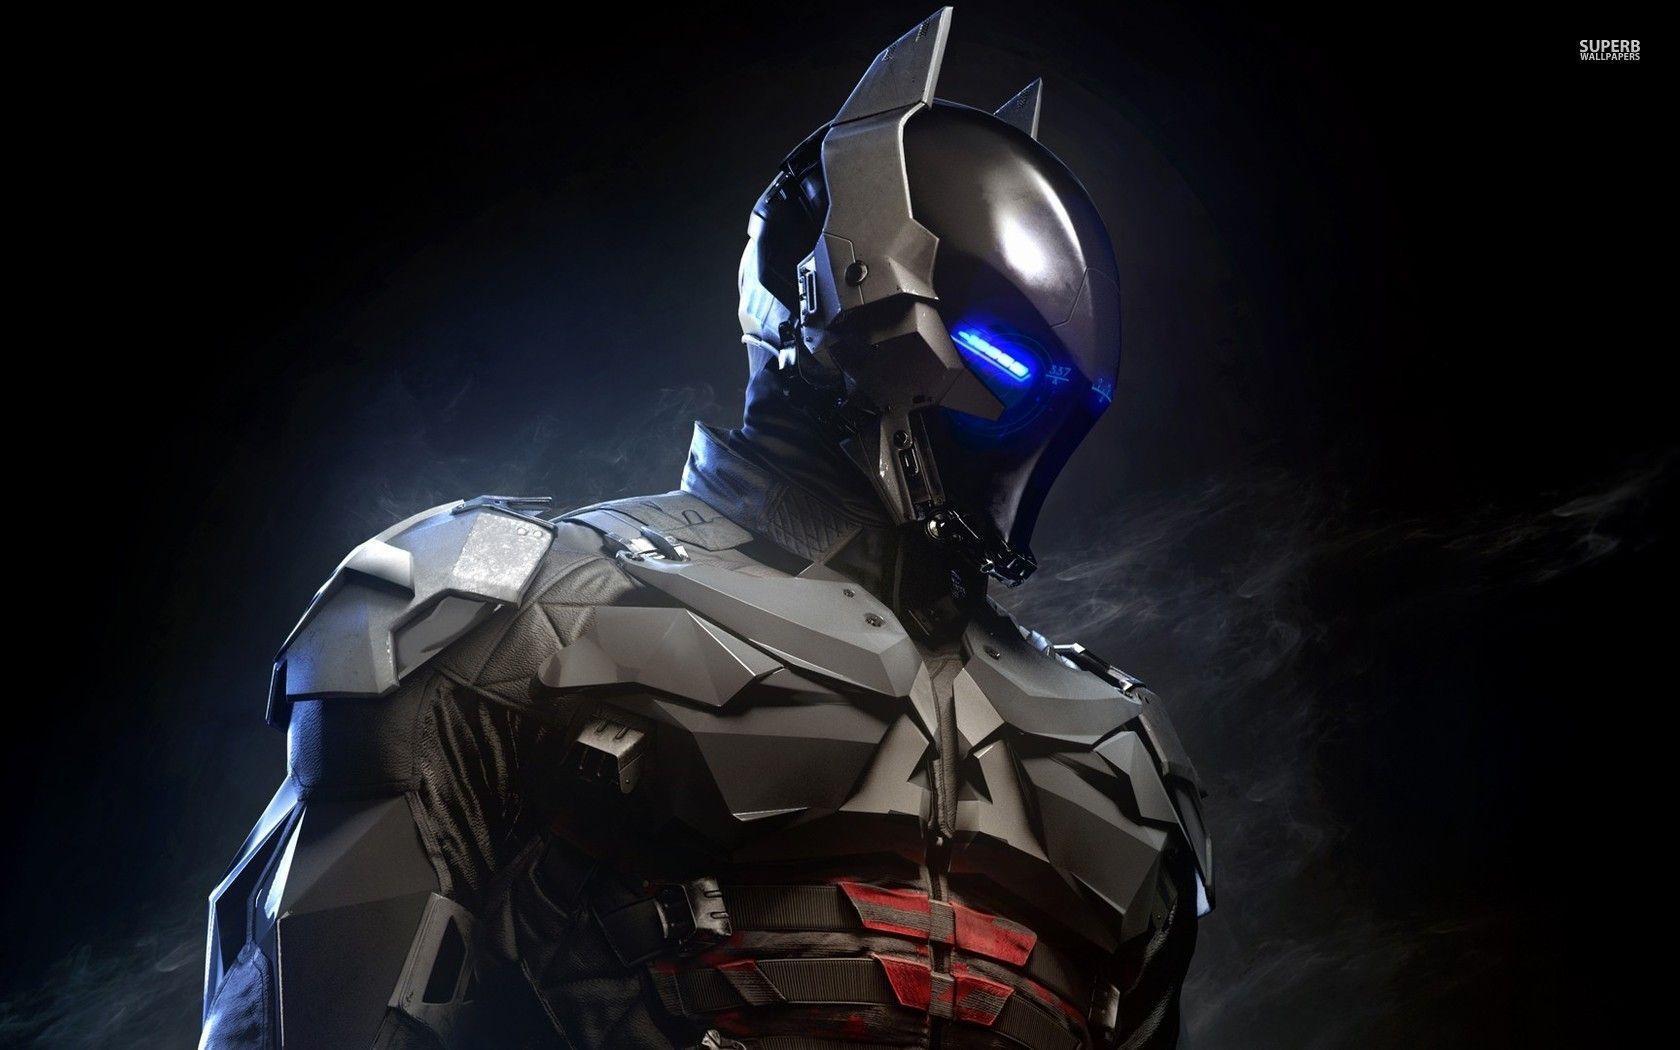 Batman Arkham Knight Wallpaper Download